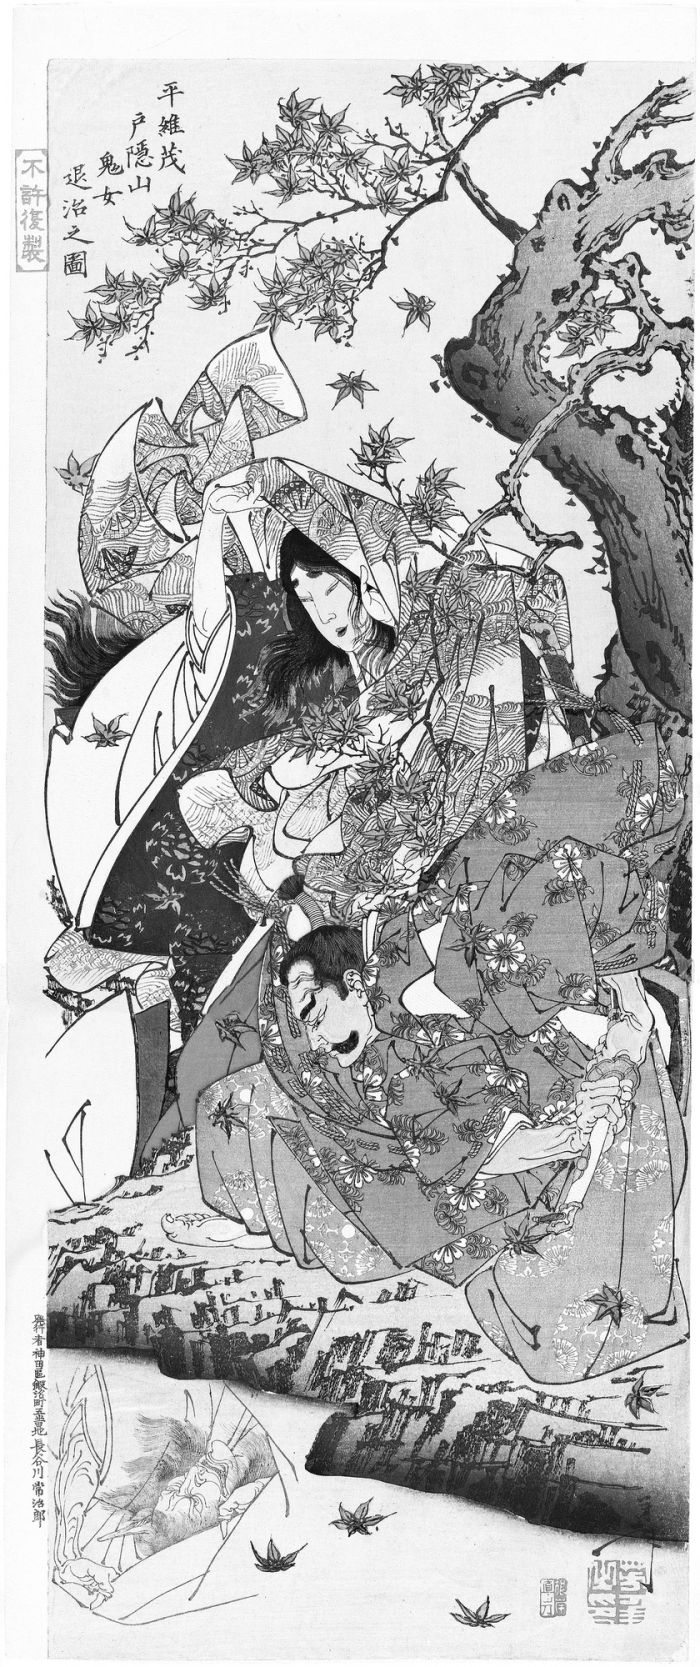 Tsukioka Yoshitoshi, “Taira no Koremochi sconfigge la donna demone sul monte Togakushi”, 1887, xilografia su carta, dittico oban, Art Institut of Chicago. (Rielaborazione)